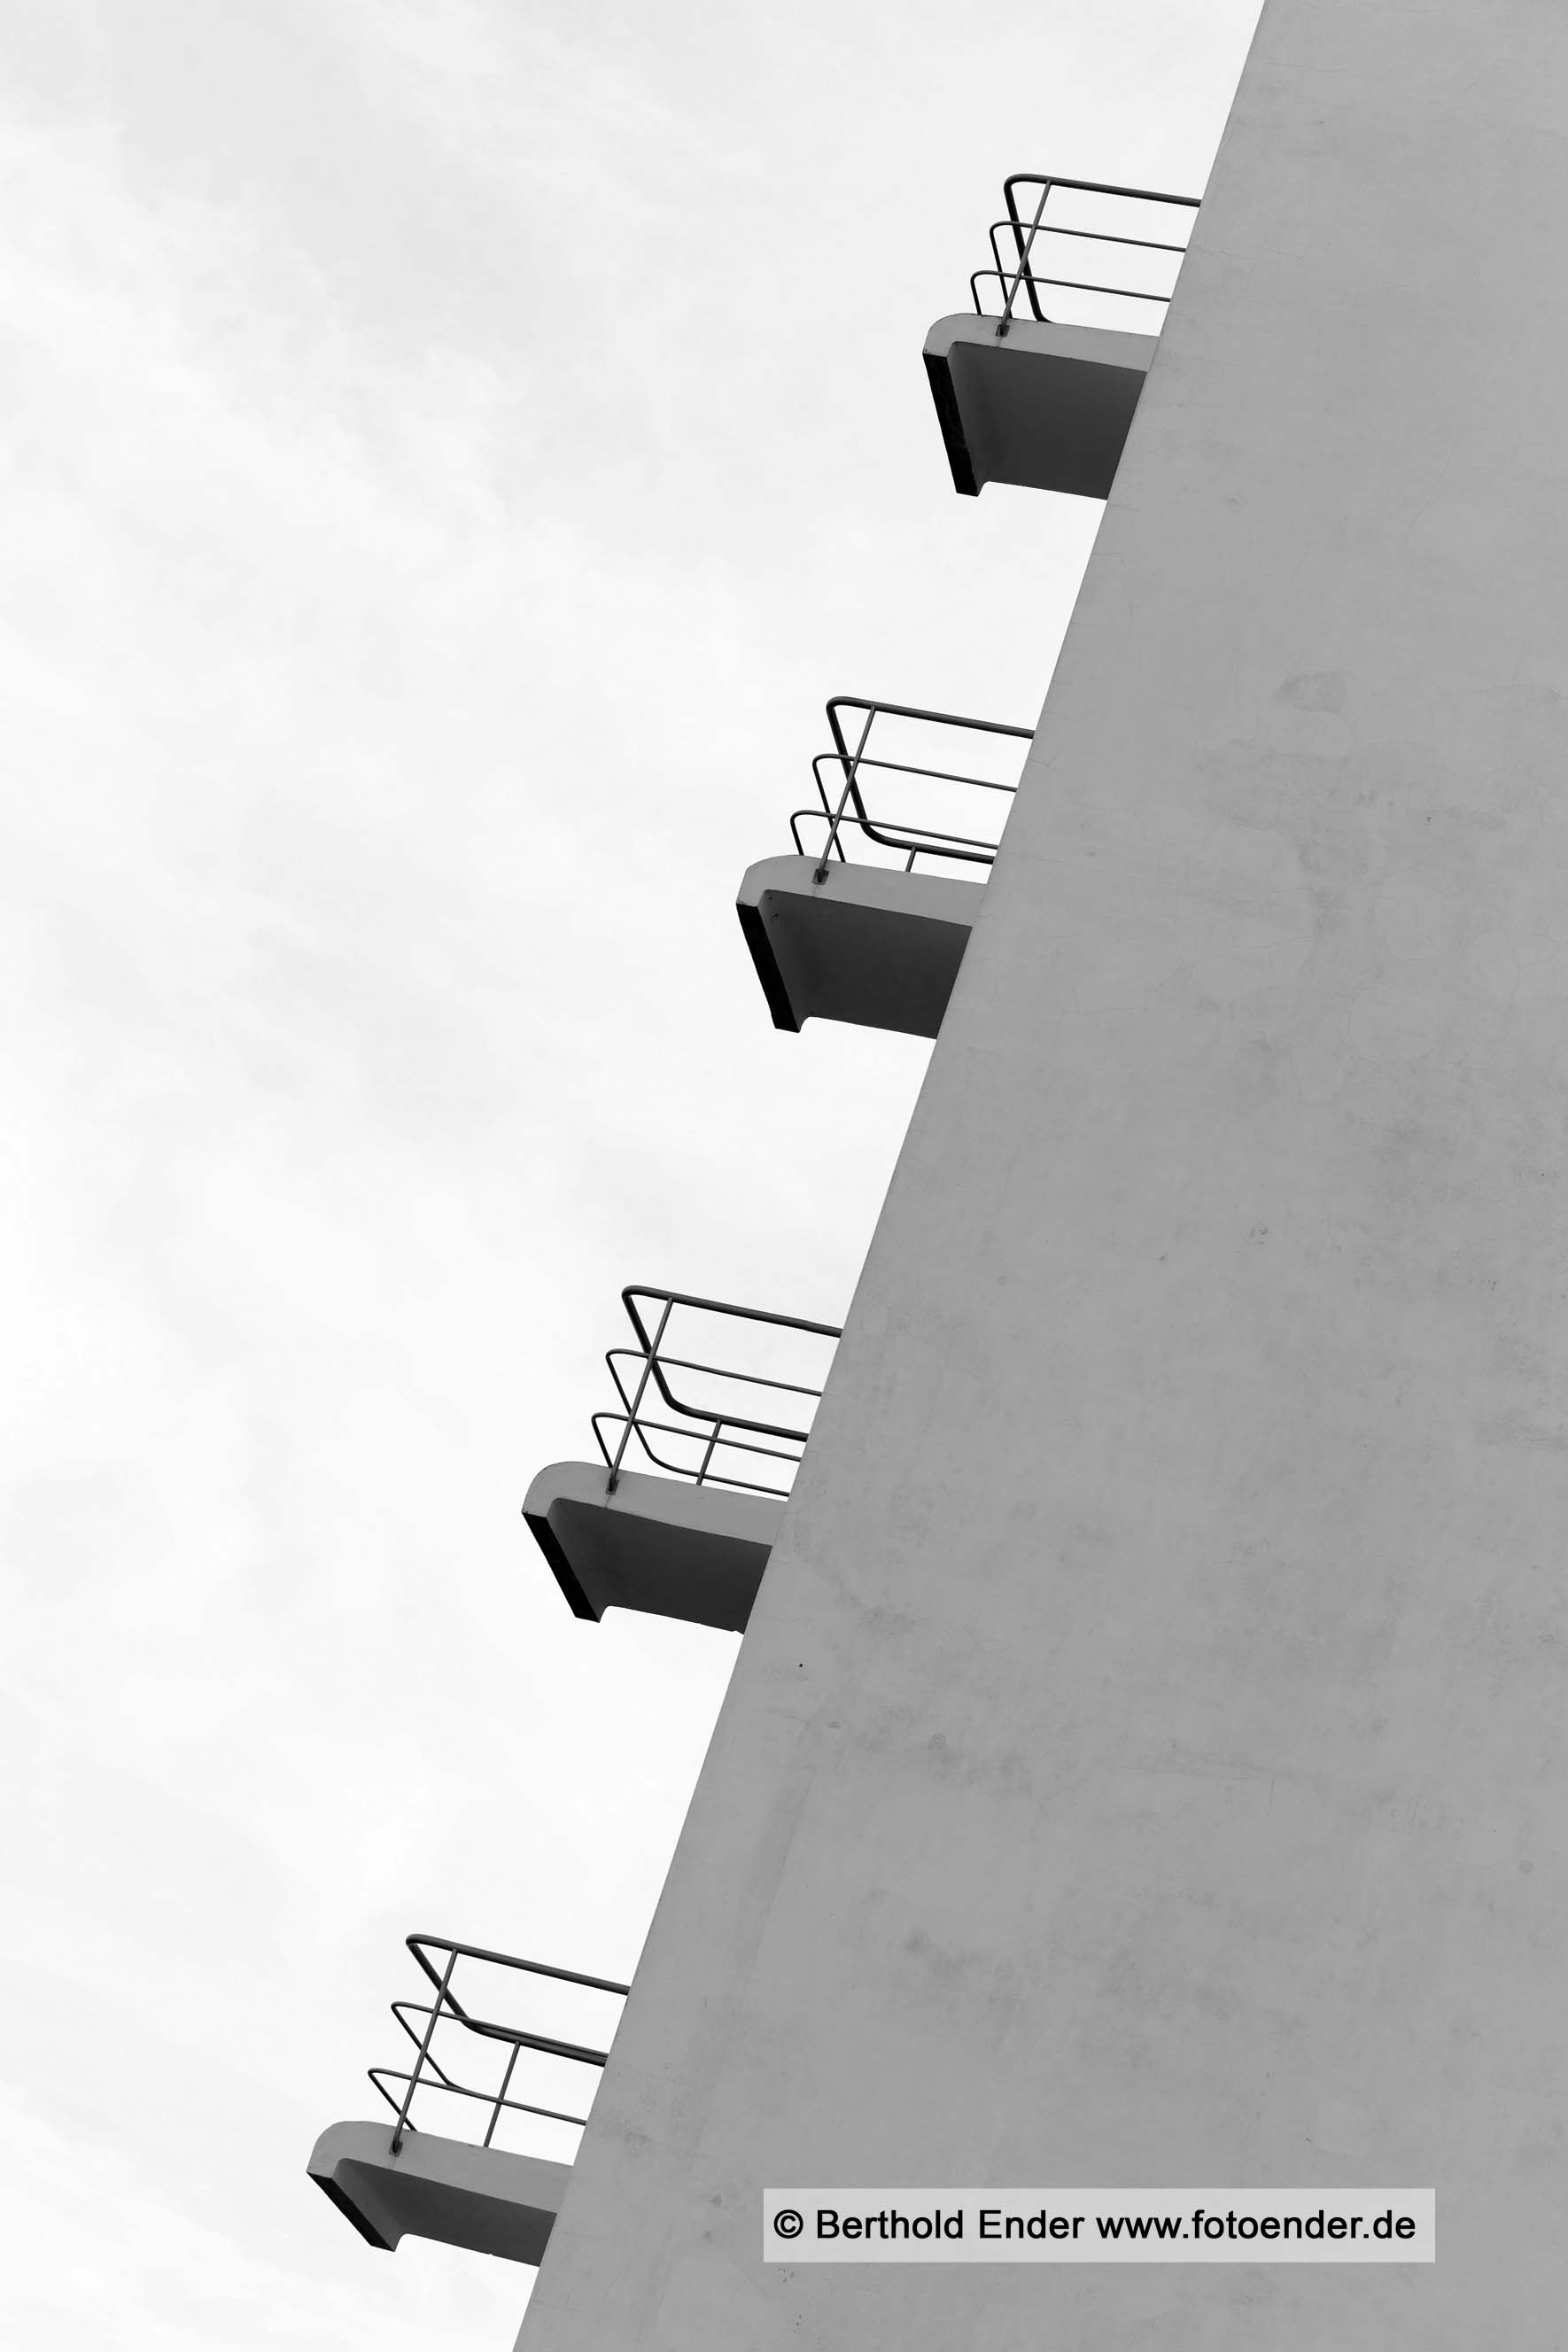 Bauhaus Dessau, Fotostudio Ender